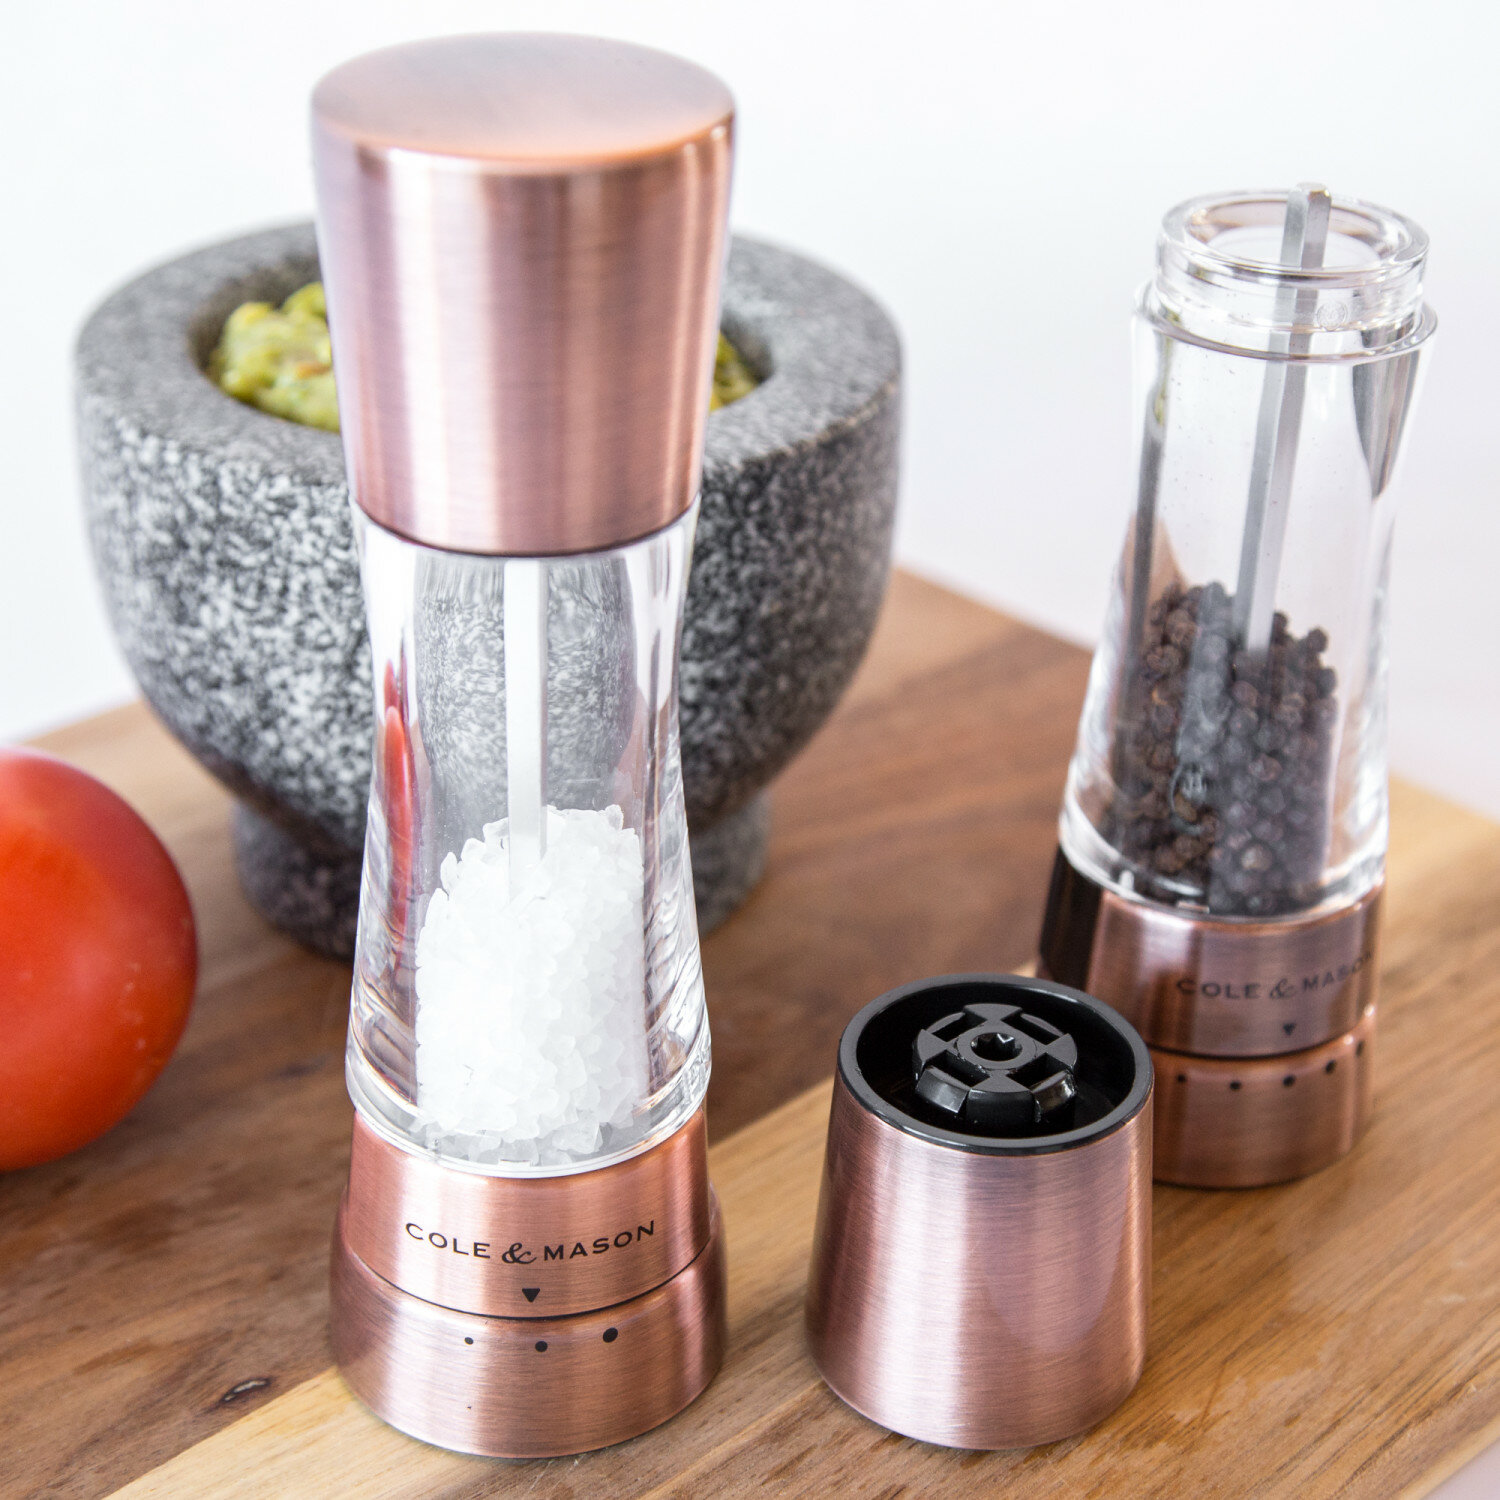 Cole & Mason Classic Copper Duo Salt & Pepper Mill Hand Grinder Shaker Gift Set